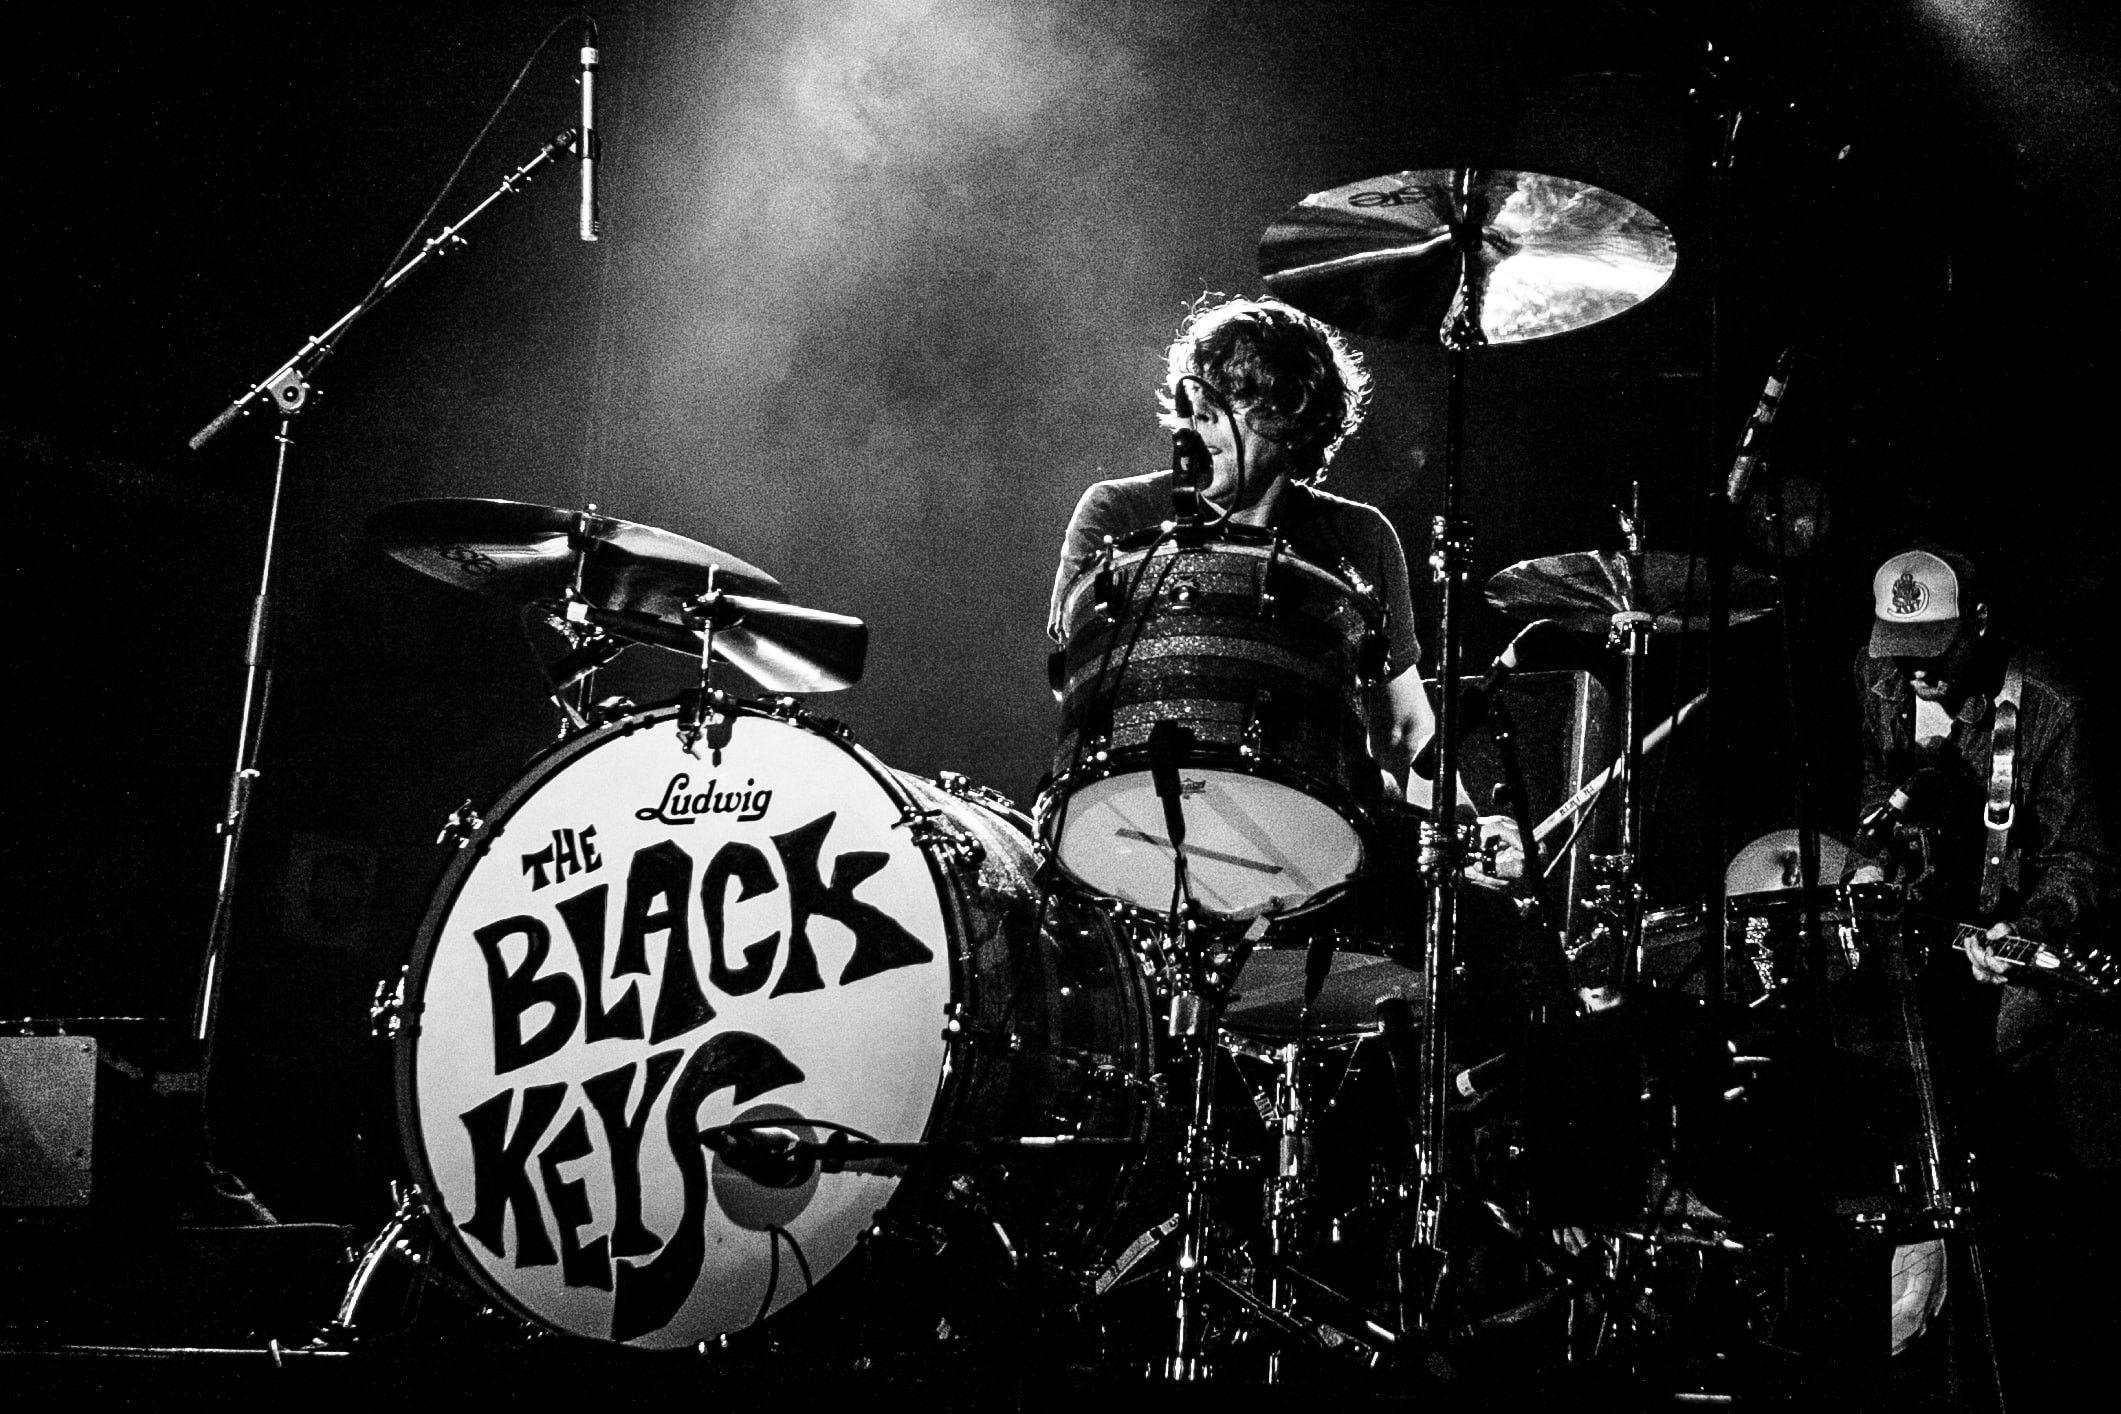 🎸 Гурт The Black Keys анонсував новий альбом Ohio Players — слухайте перший сингл